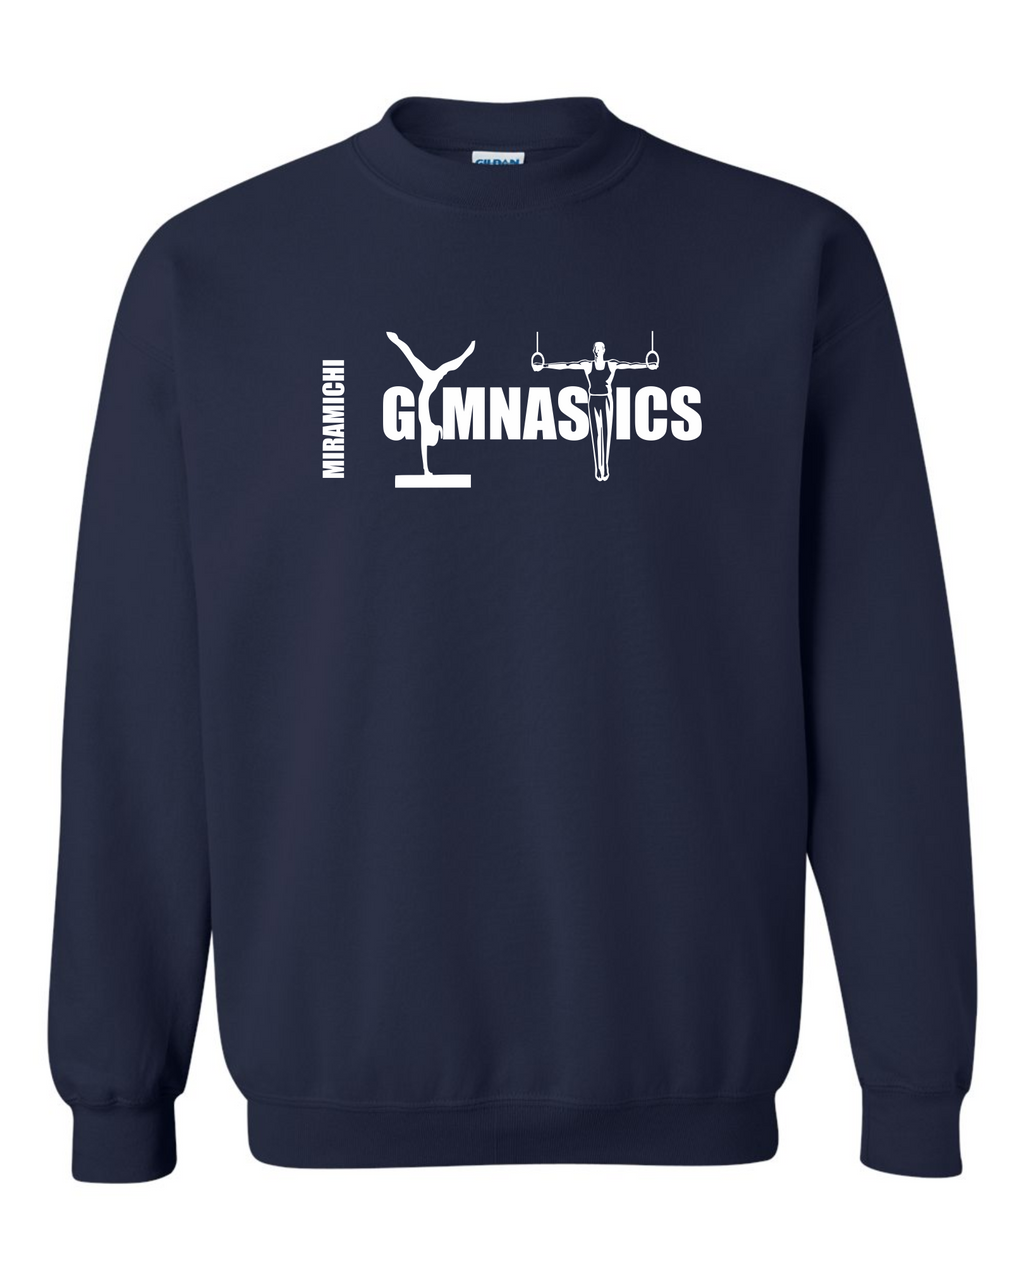 Miramichi Gymnastics - Cotton Crewneck Sweater